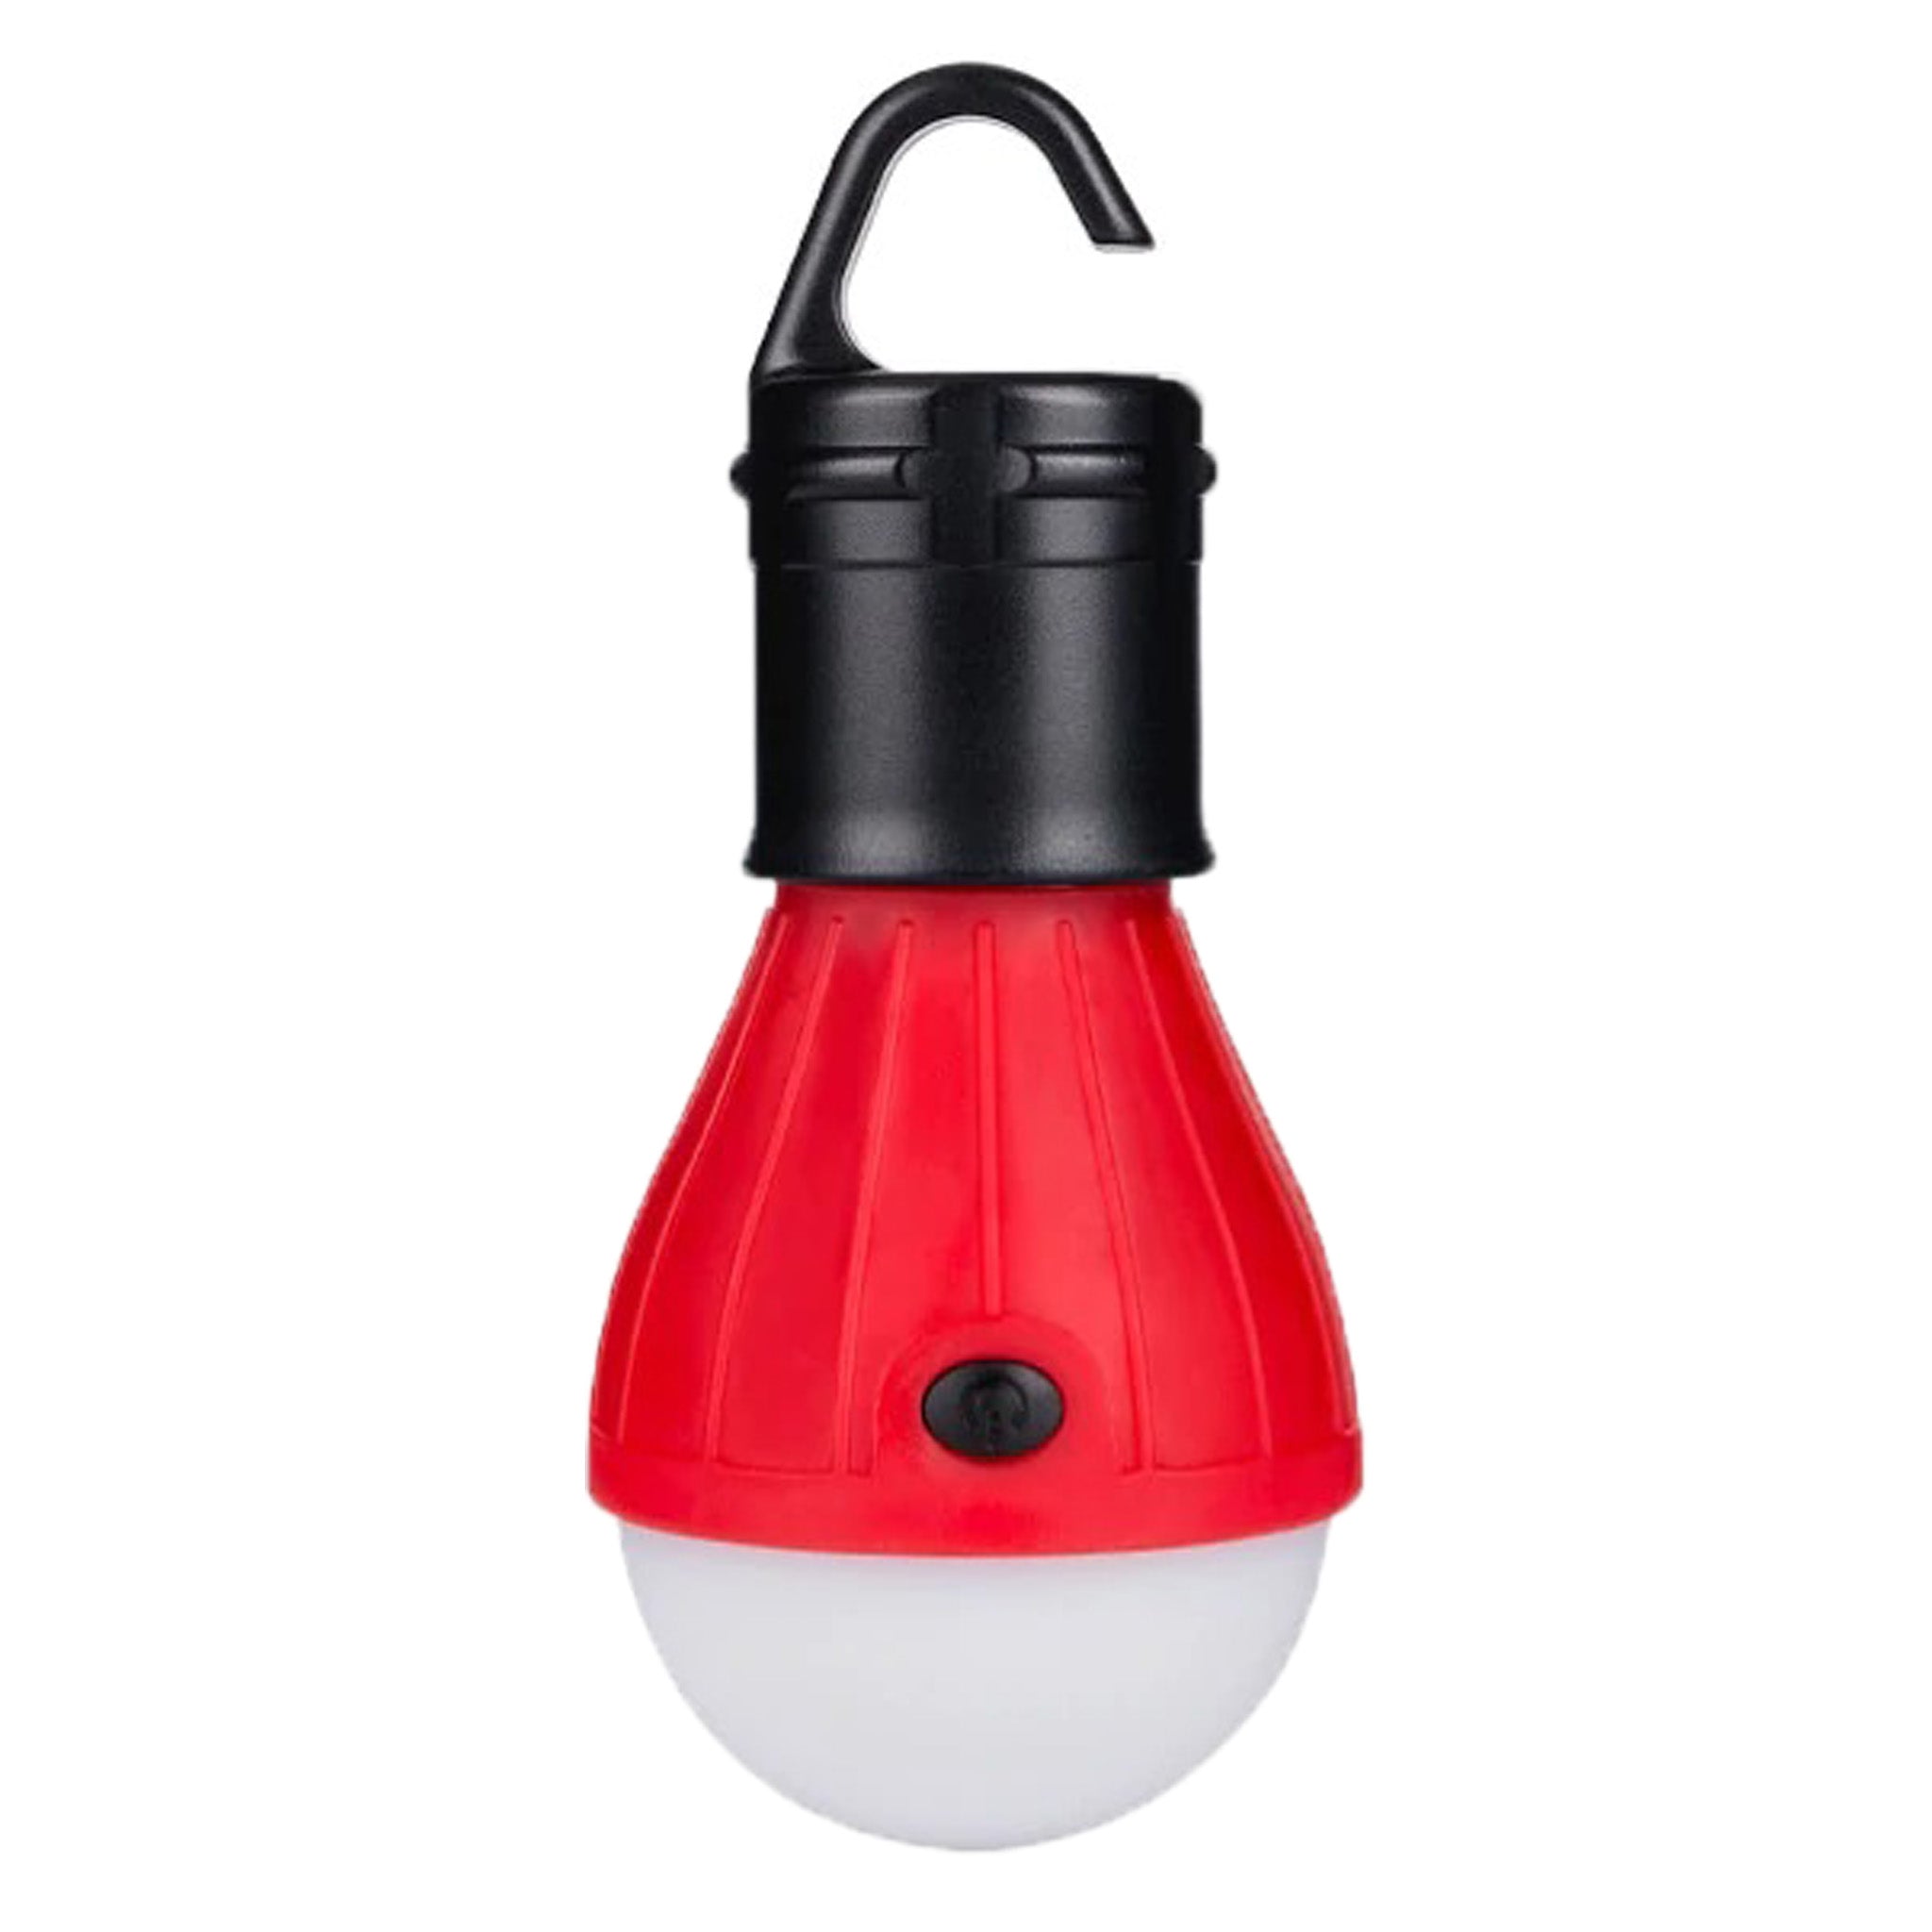 CHARITY - Portable LED Lantern - Compass Nature